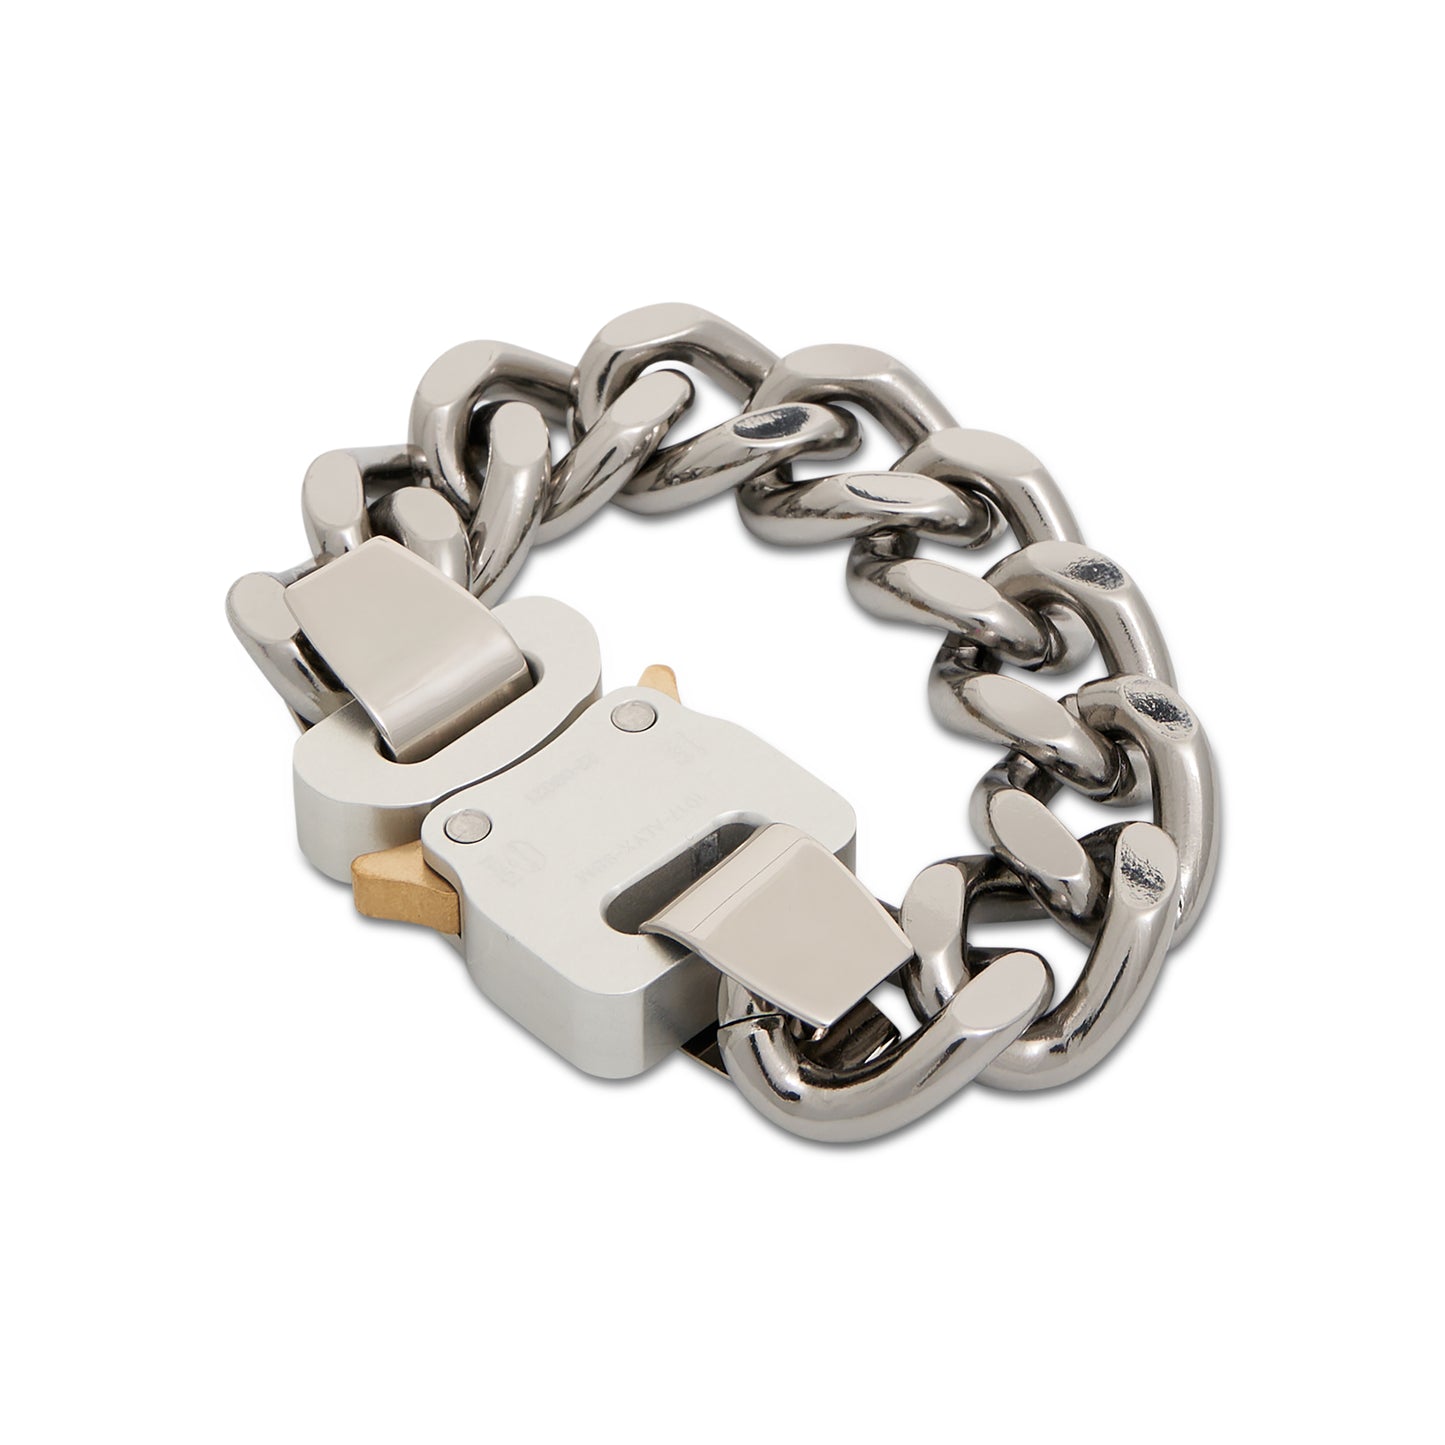 Bracelet with Buckle in Silver